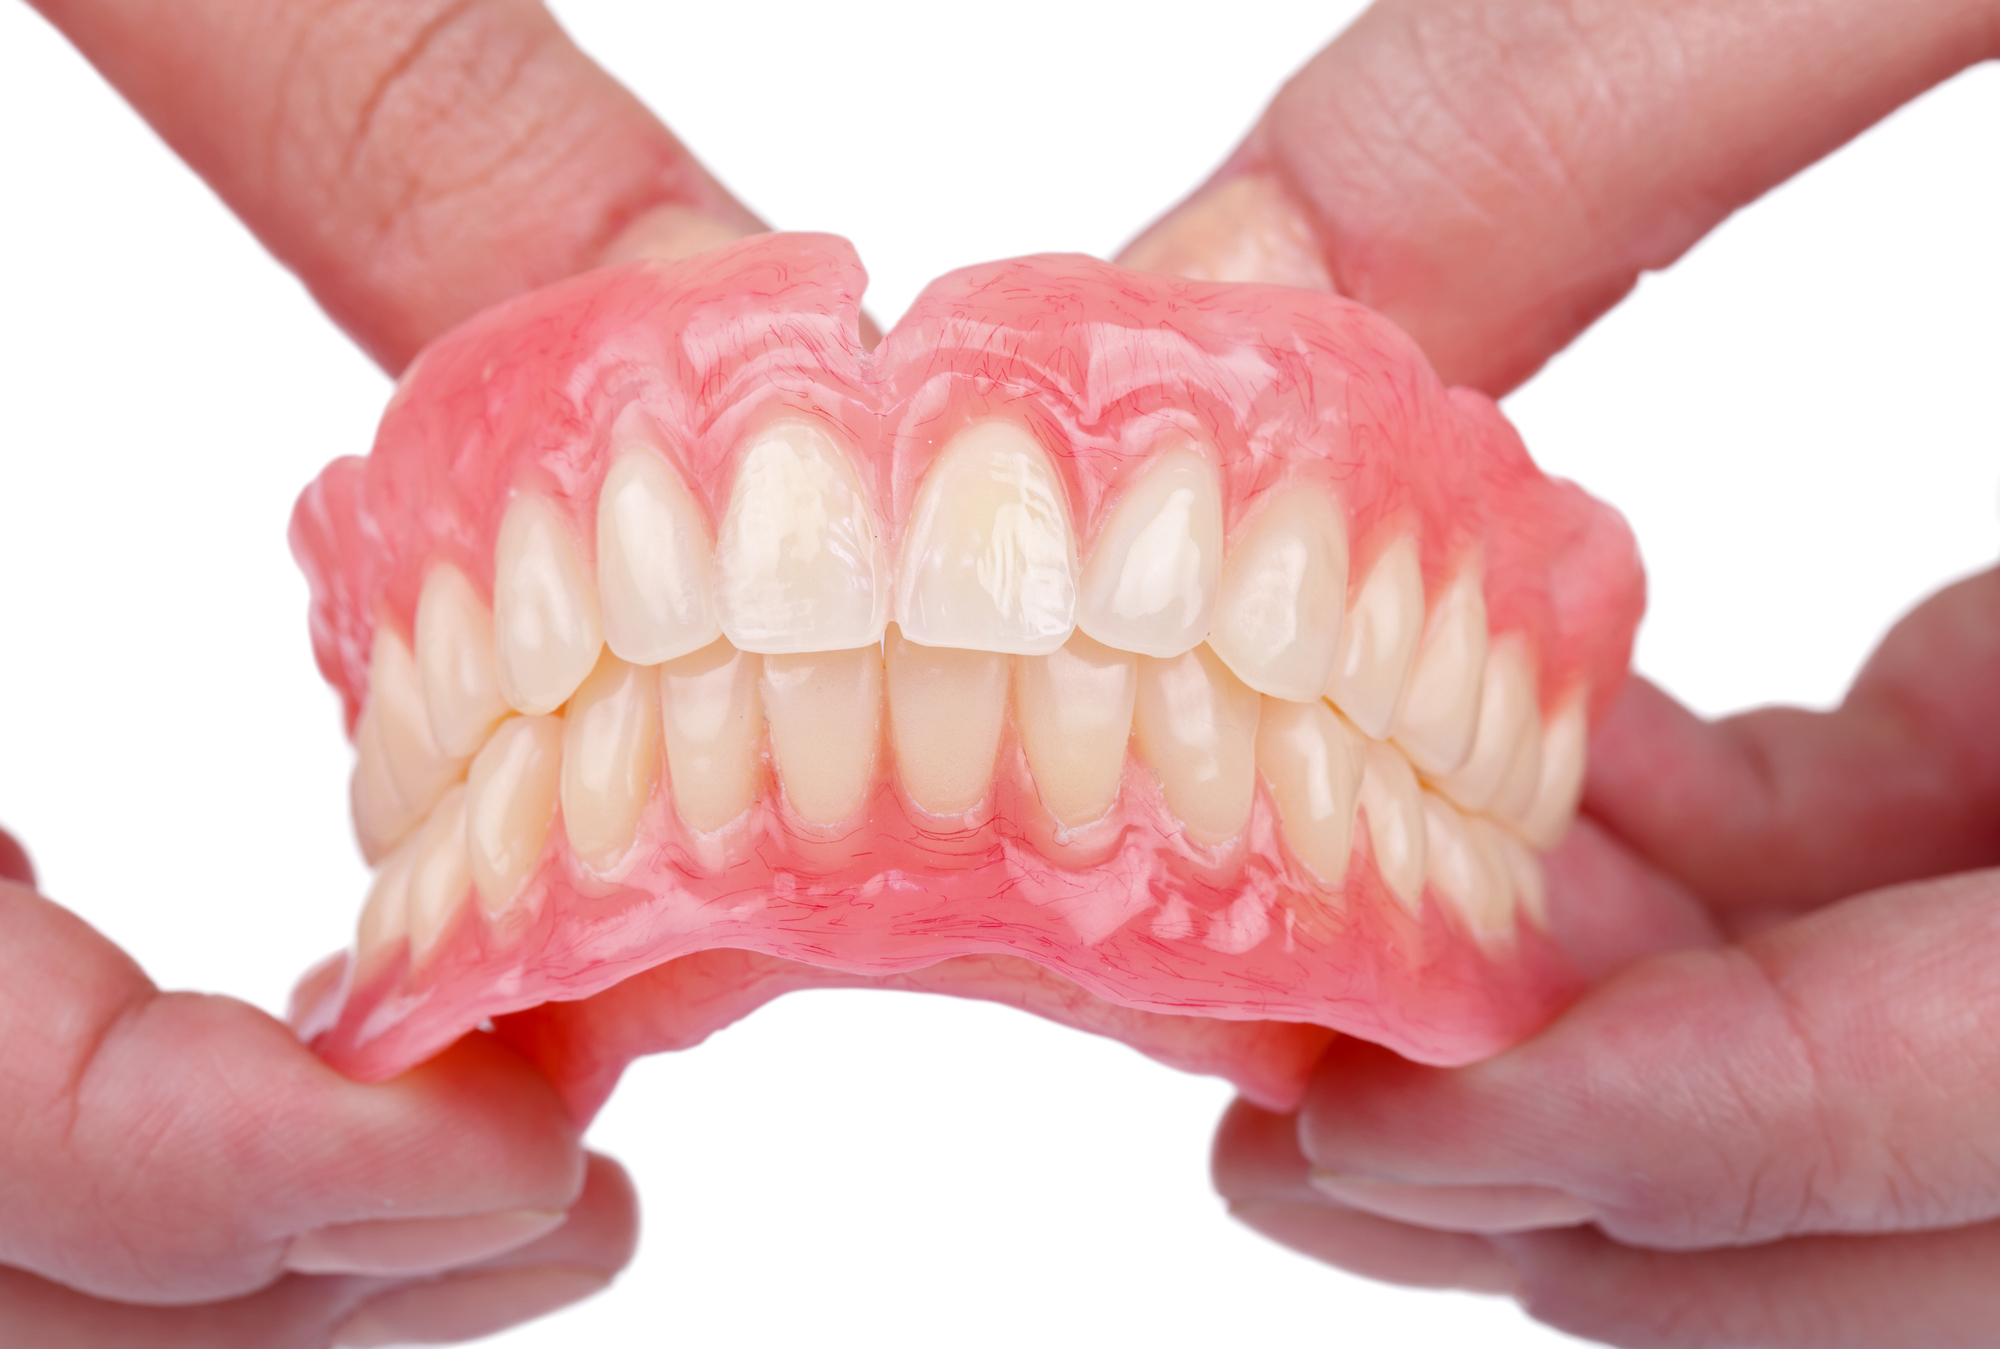 Close up of hands holding modern dentures. 